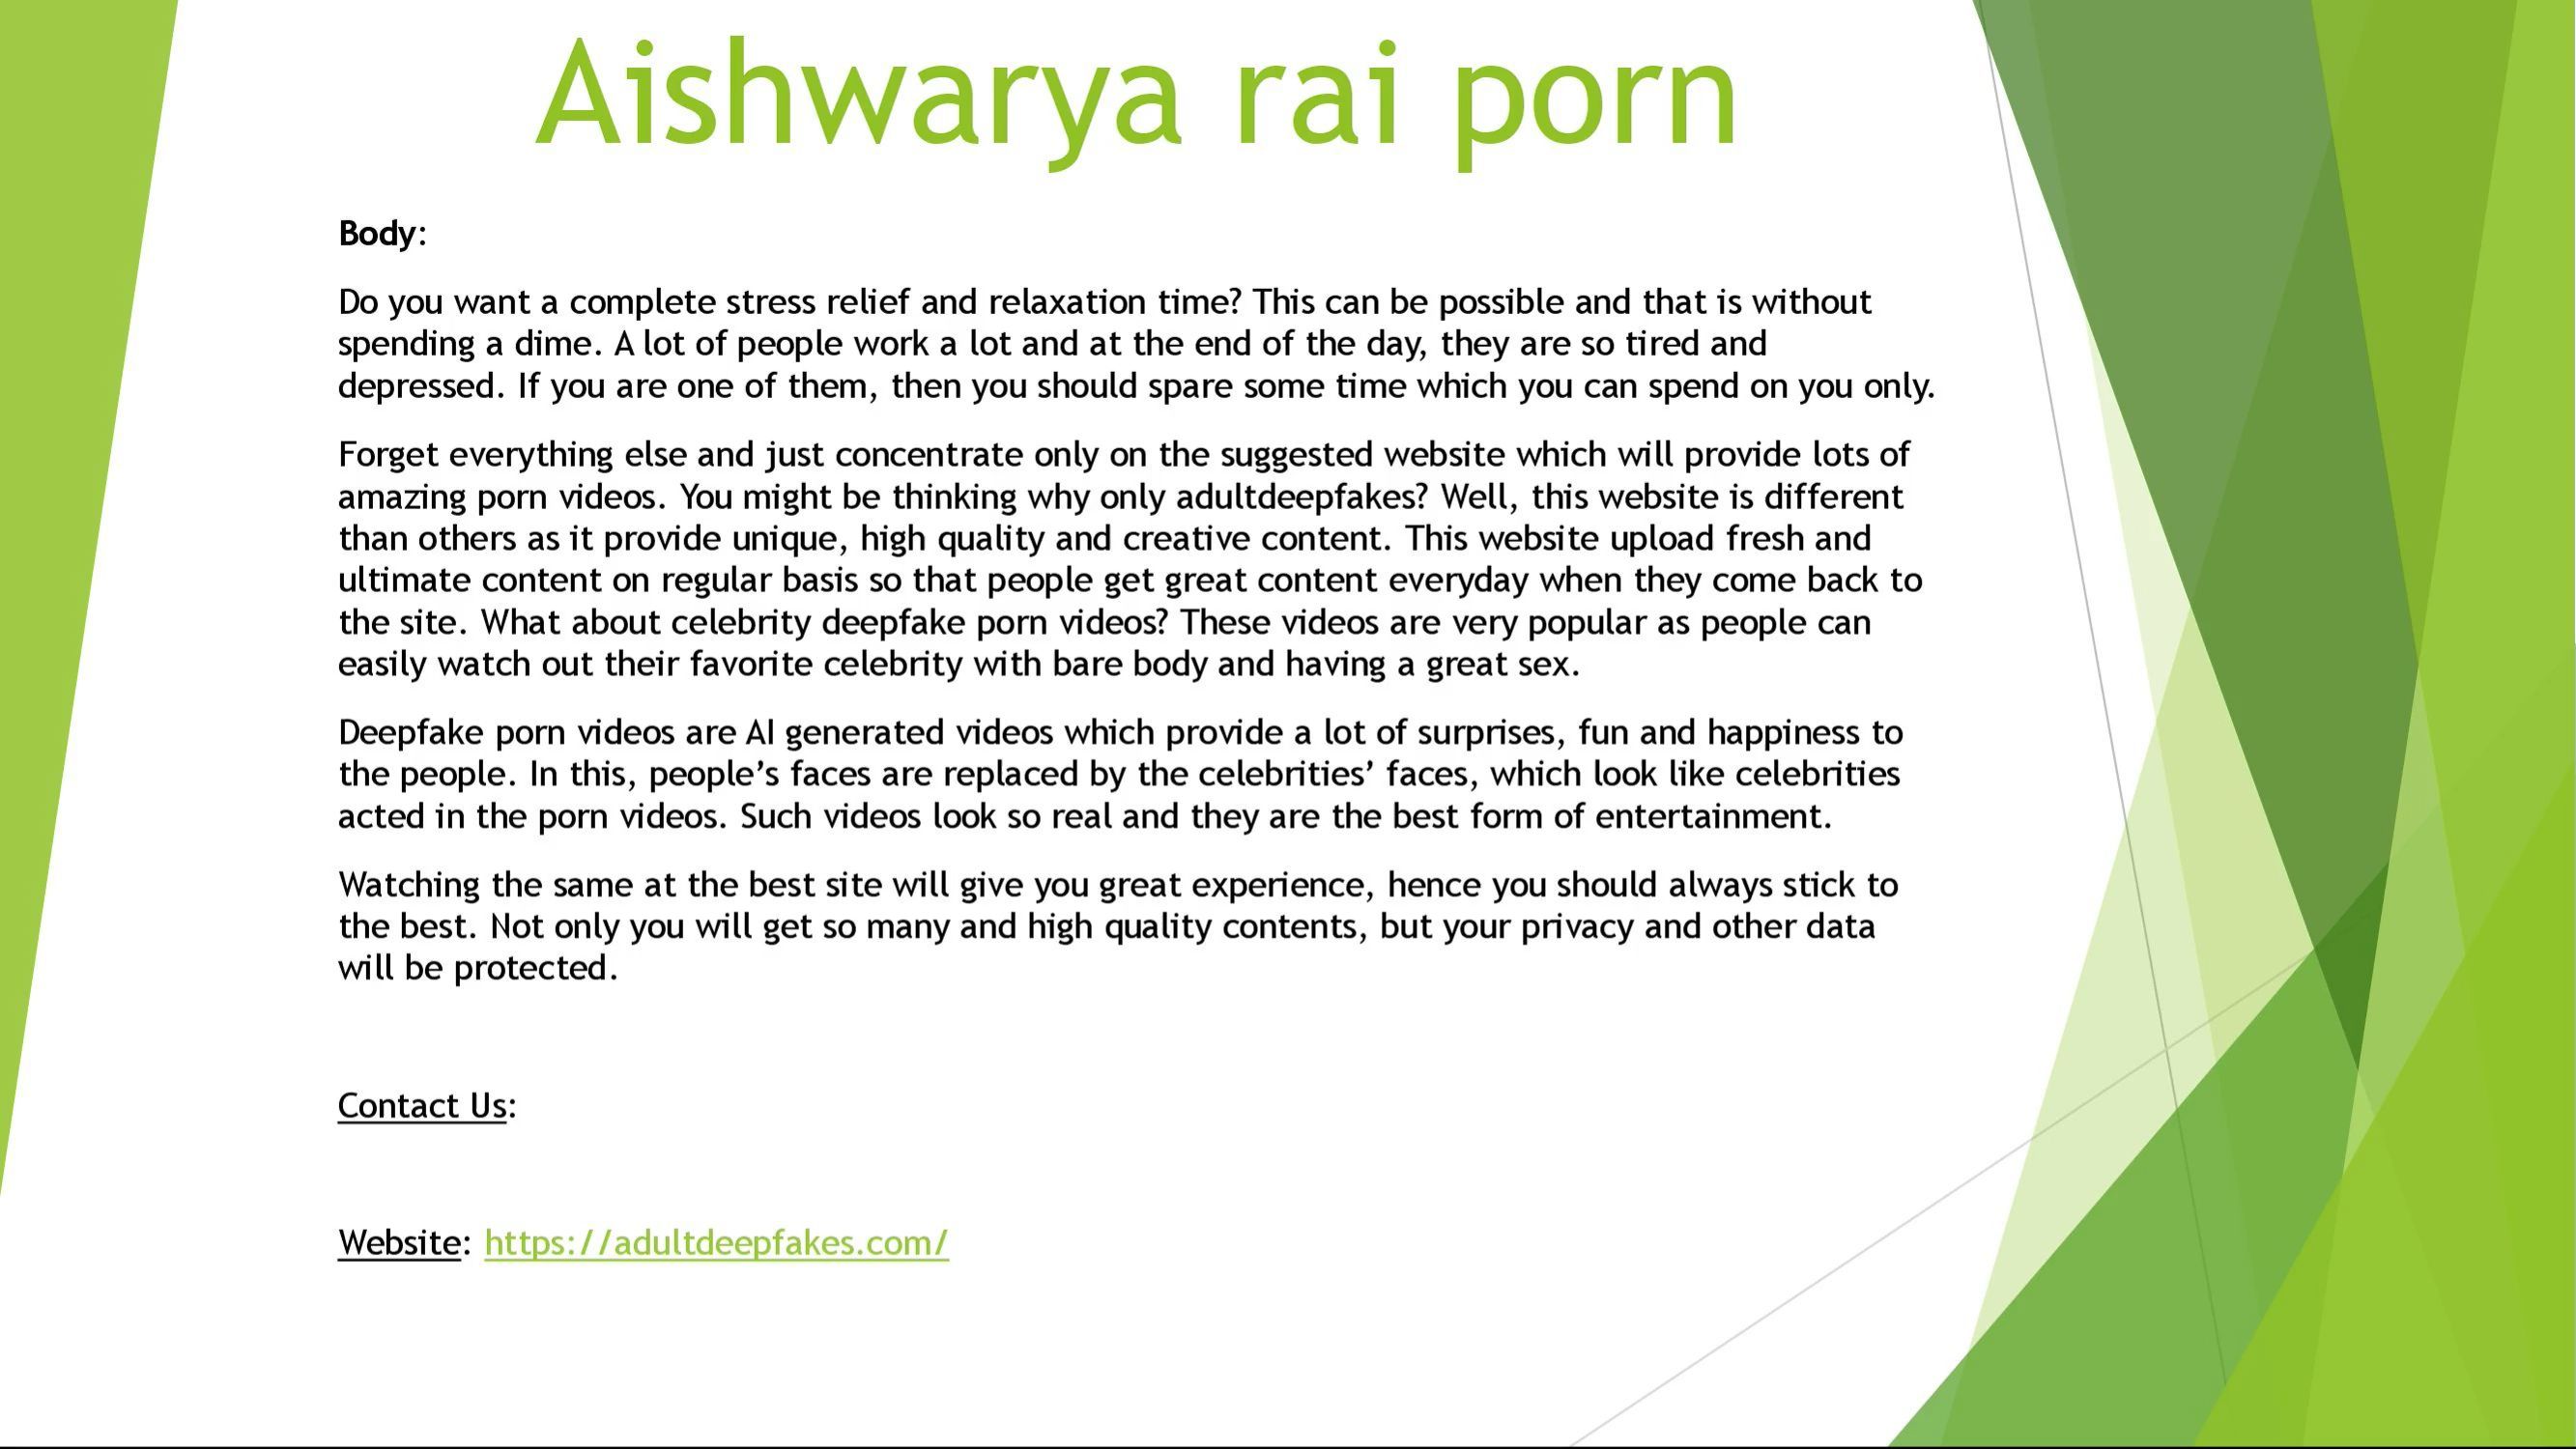 Pics Of Xx Of Aishwarya Rai - Aishwarya rai porn - Bilibili